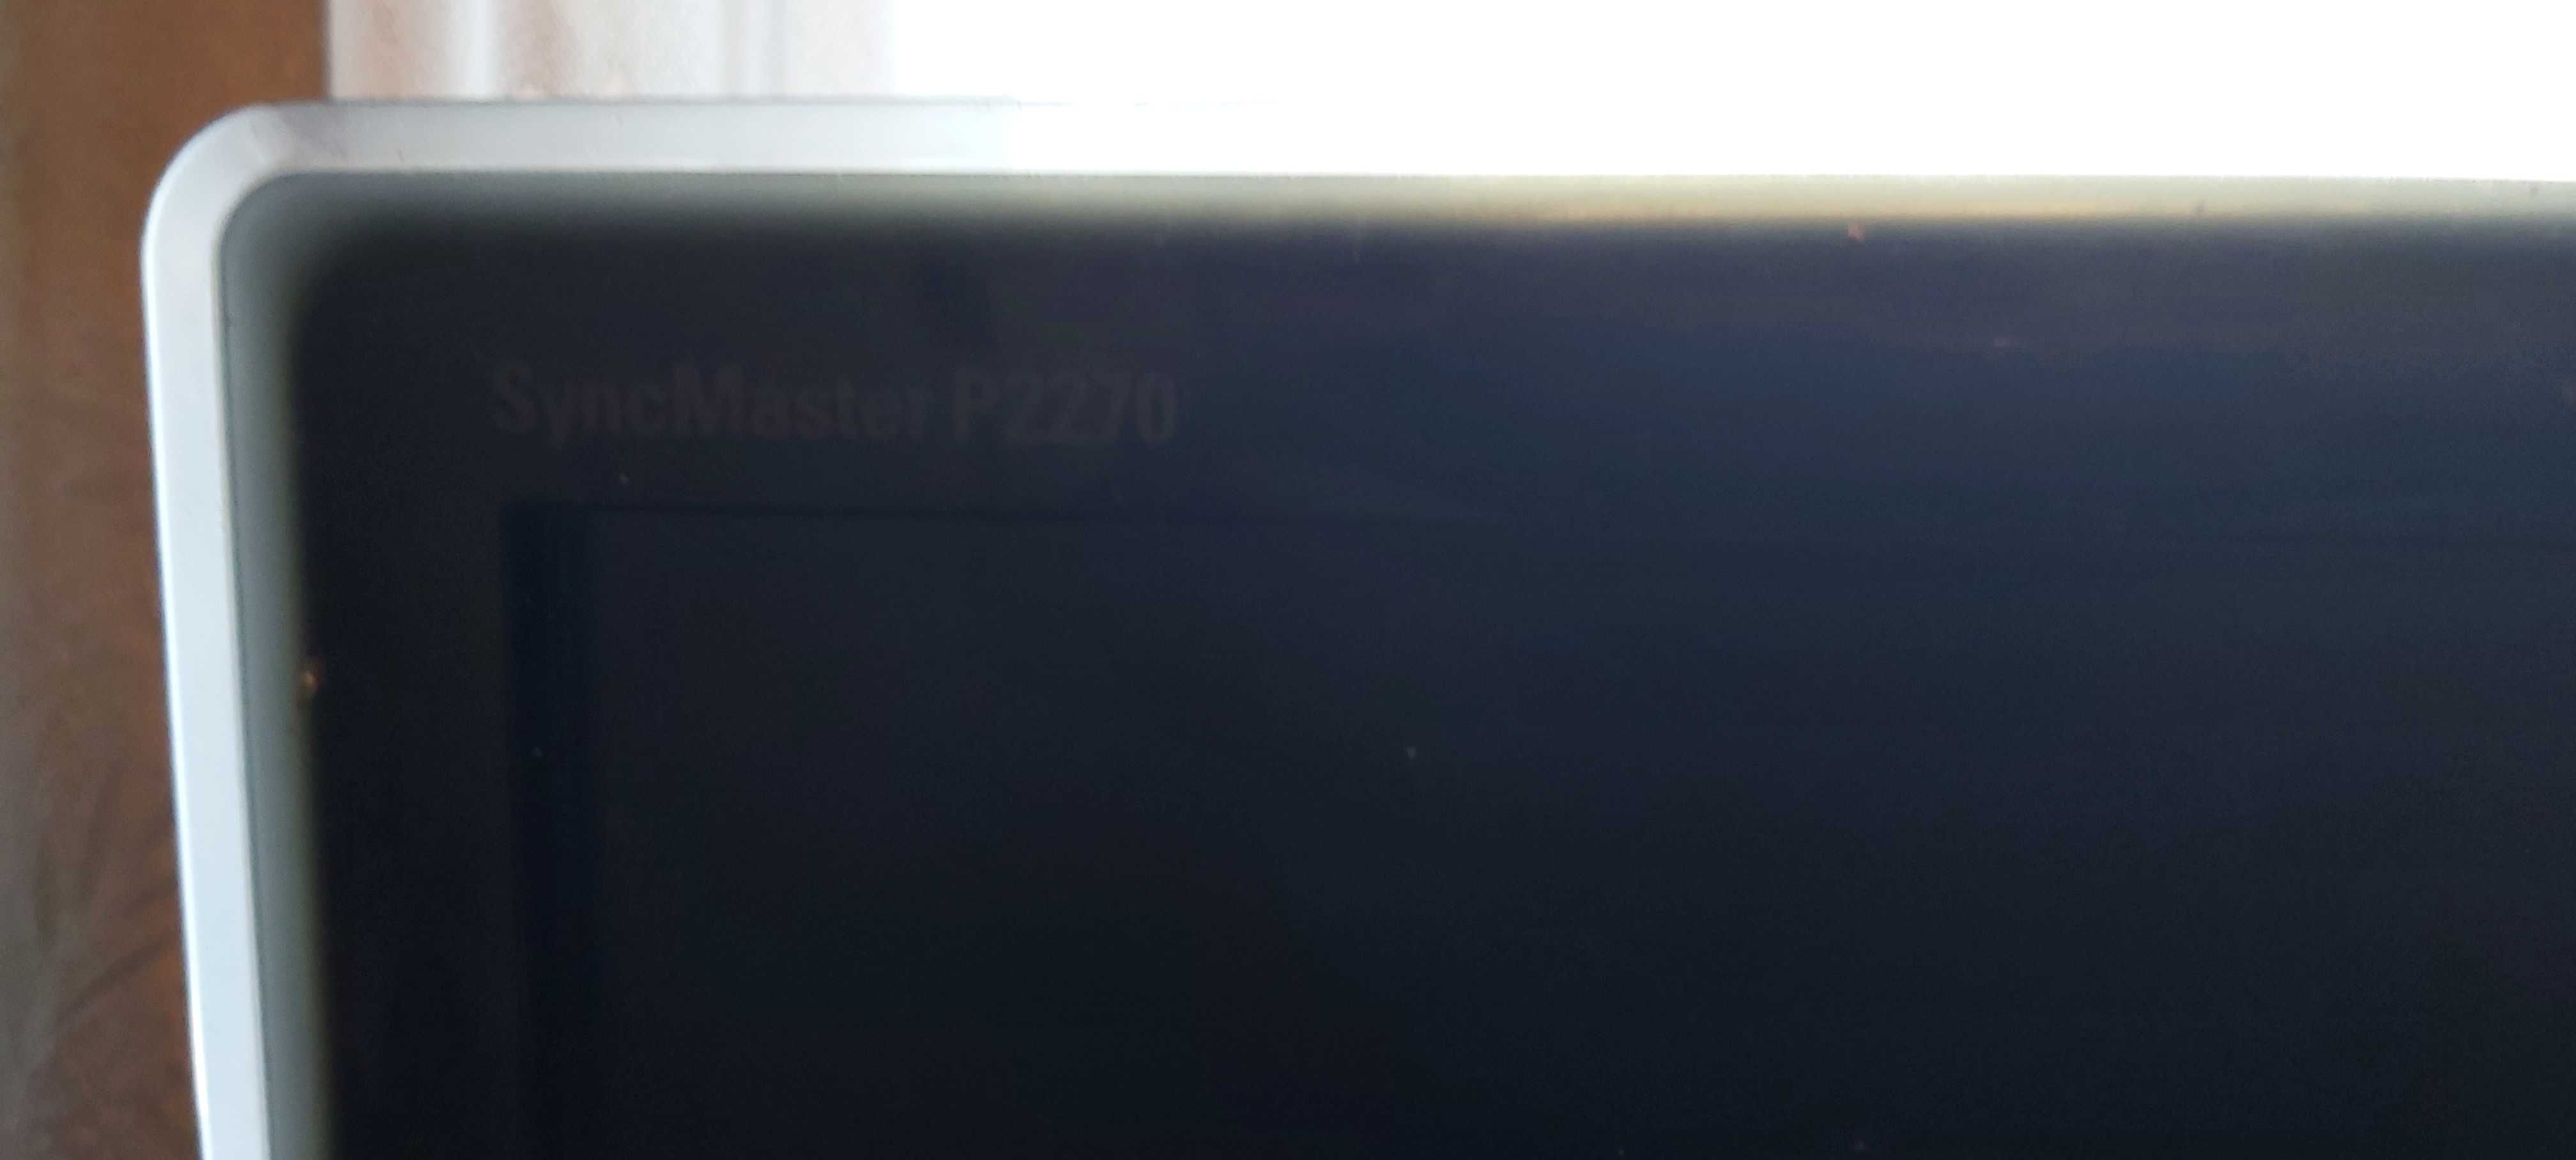 Монитор Samsung SyncMaster P2270 22 дюйма \2ms-время отклика